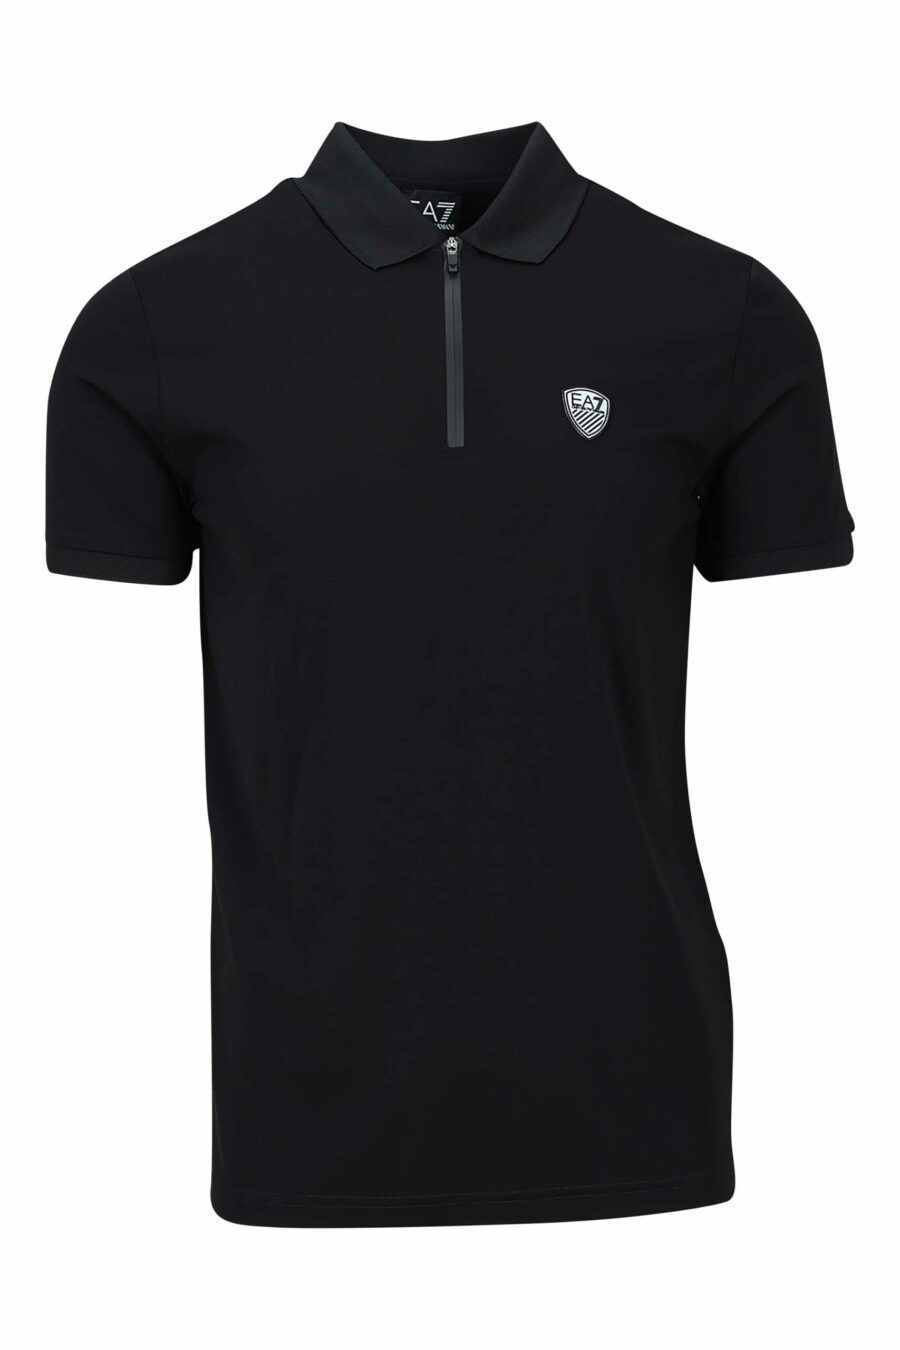 Black polo shirt with "lux identity" mini logo - 8057767614805 scaled